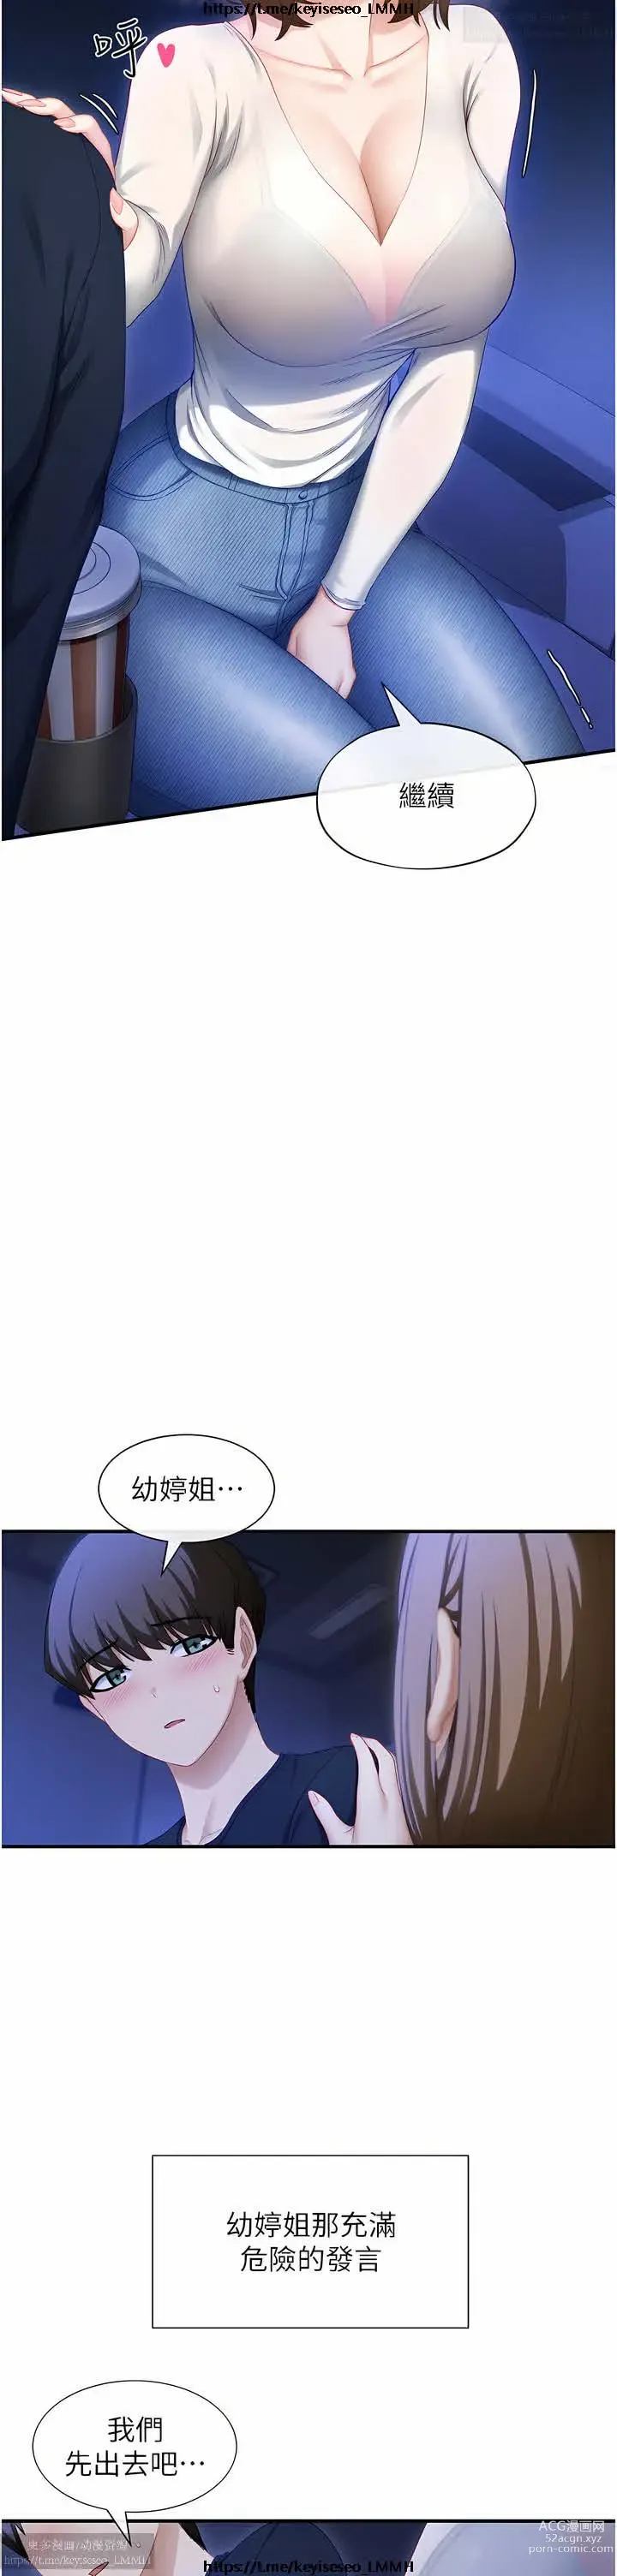 Page 6 of manga 脱单神器 1-27